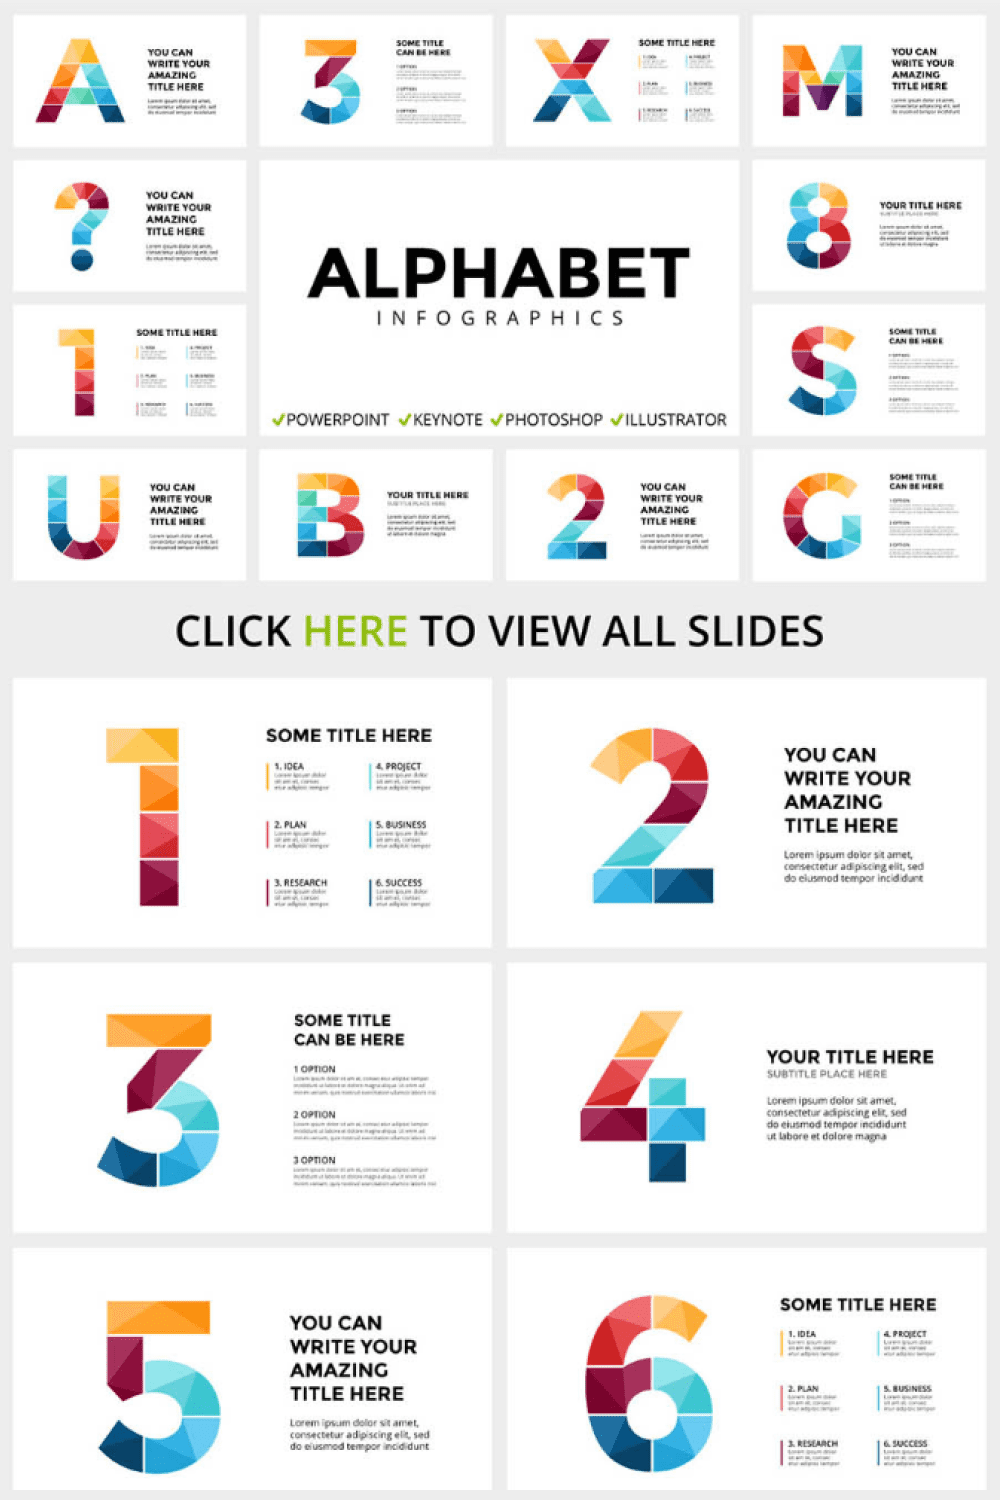 ALPHABET - Infographic Slides - MasterBundles - Pinterest Collage Image.